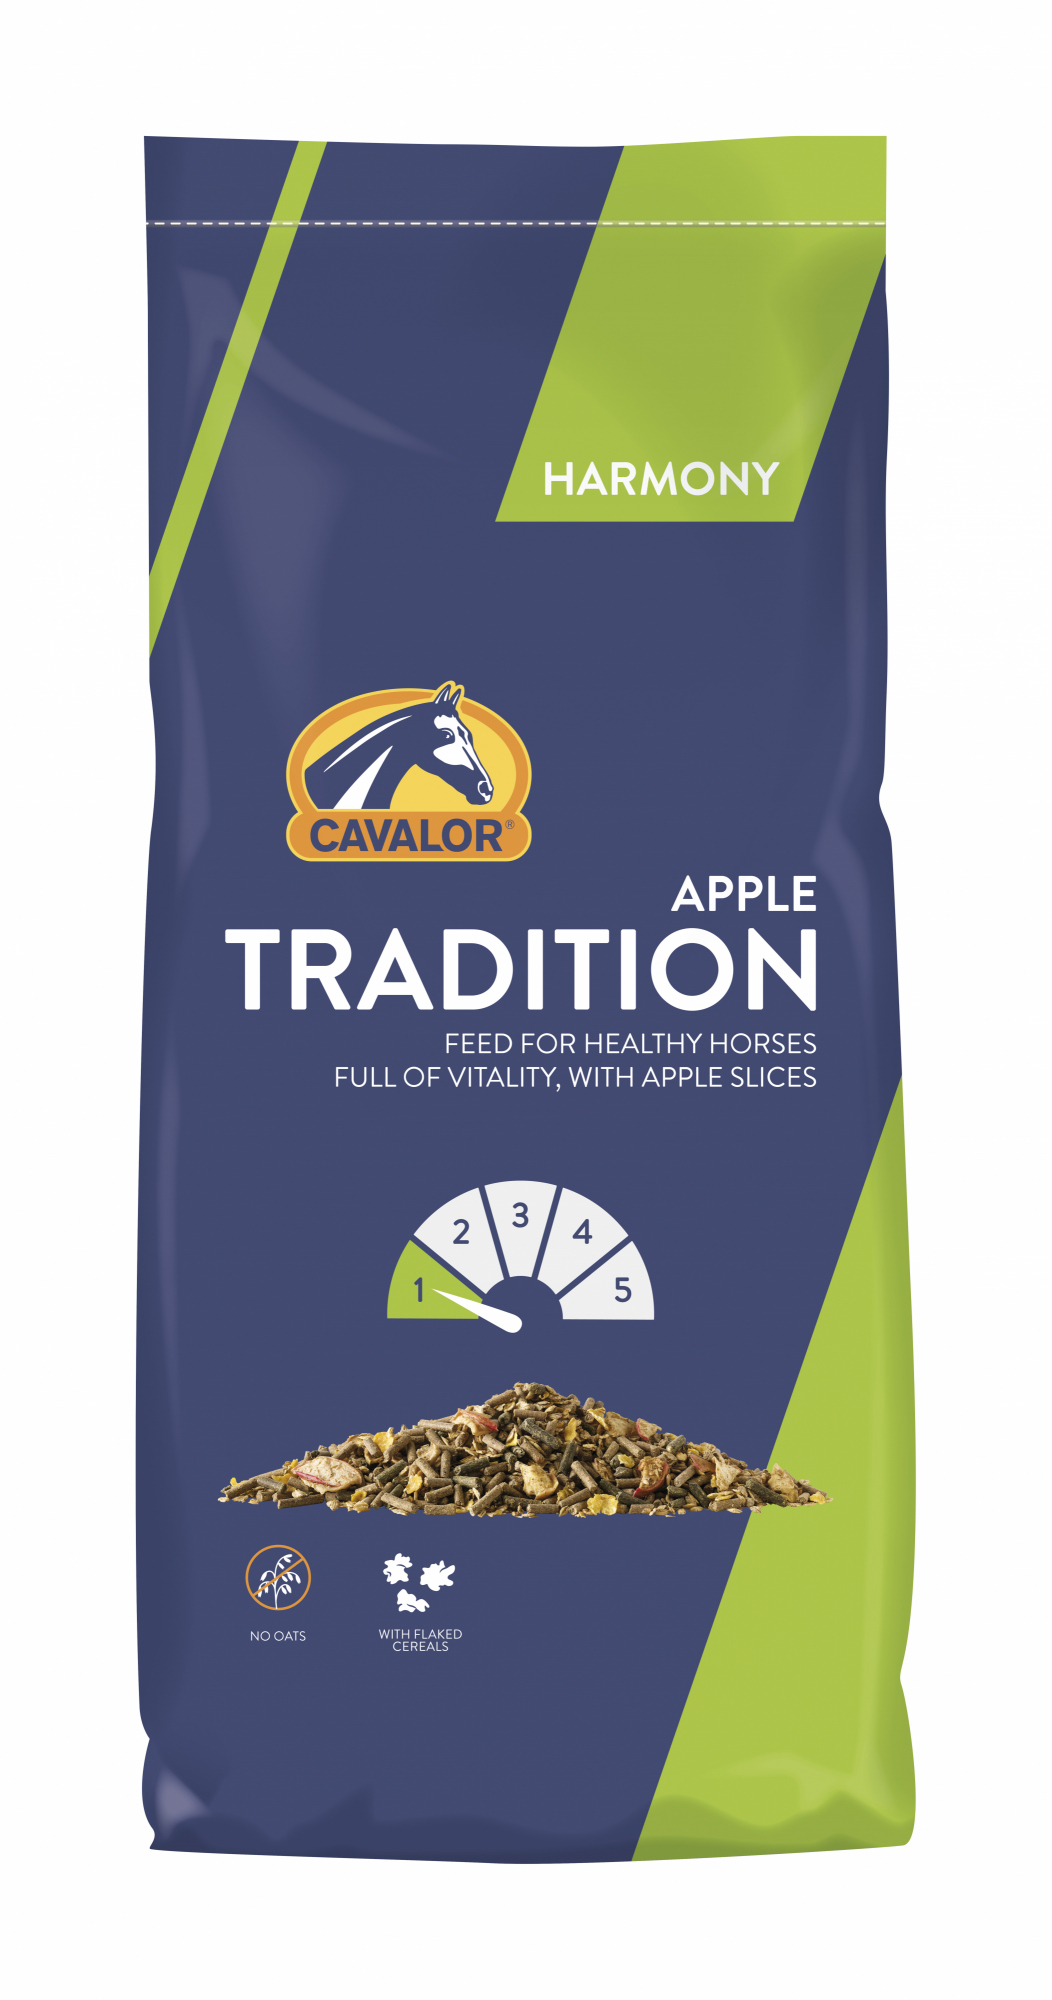 Cavalor HARMONY Tradition Apfelmüsli für Freizeitpferde